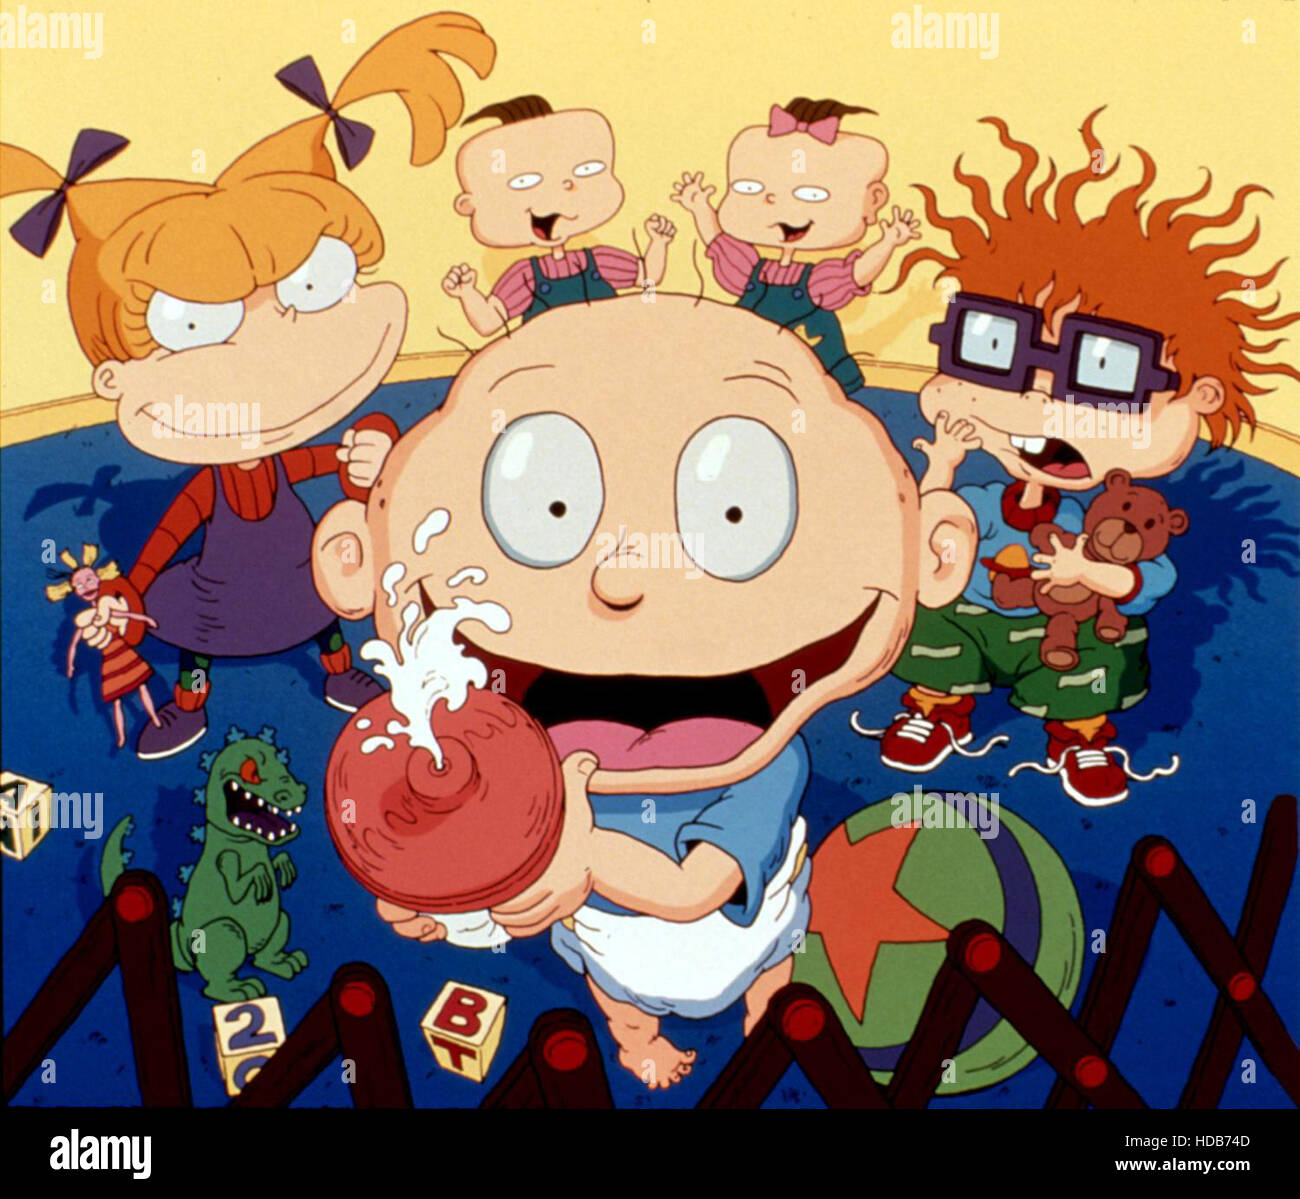 RUGRATS, Angelica, gemelli, Chuckie, Tommy, 1991-presente Foto stock - Alamy